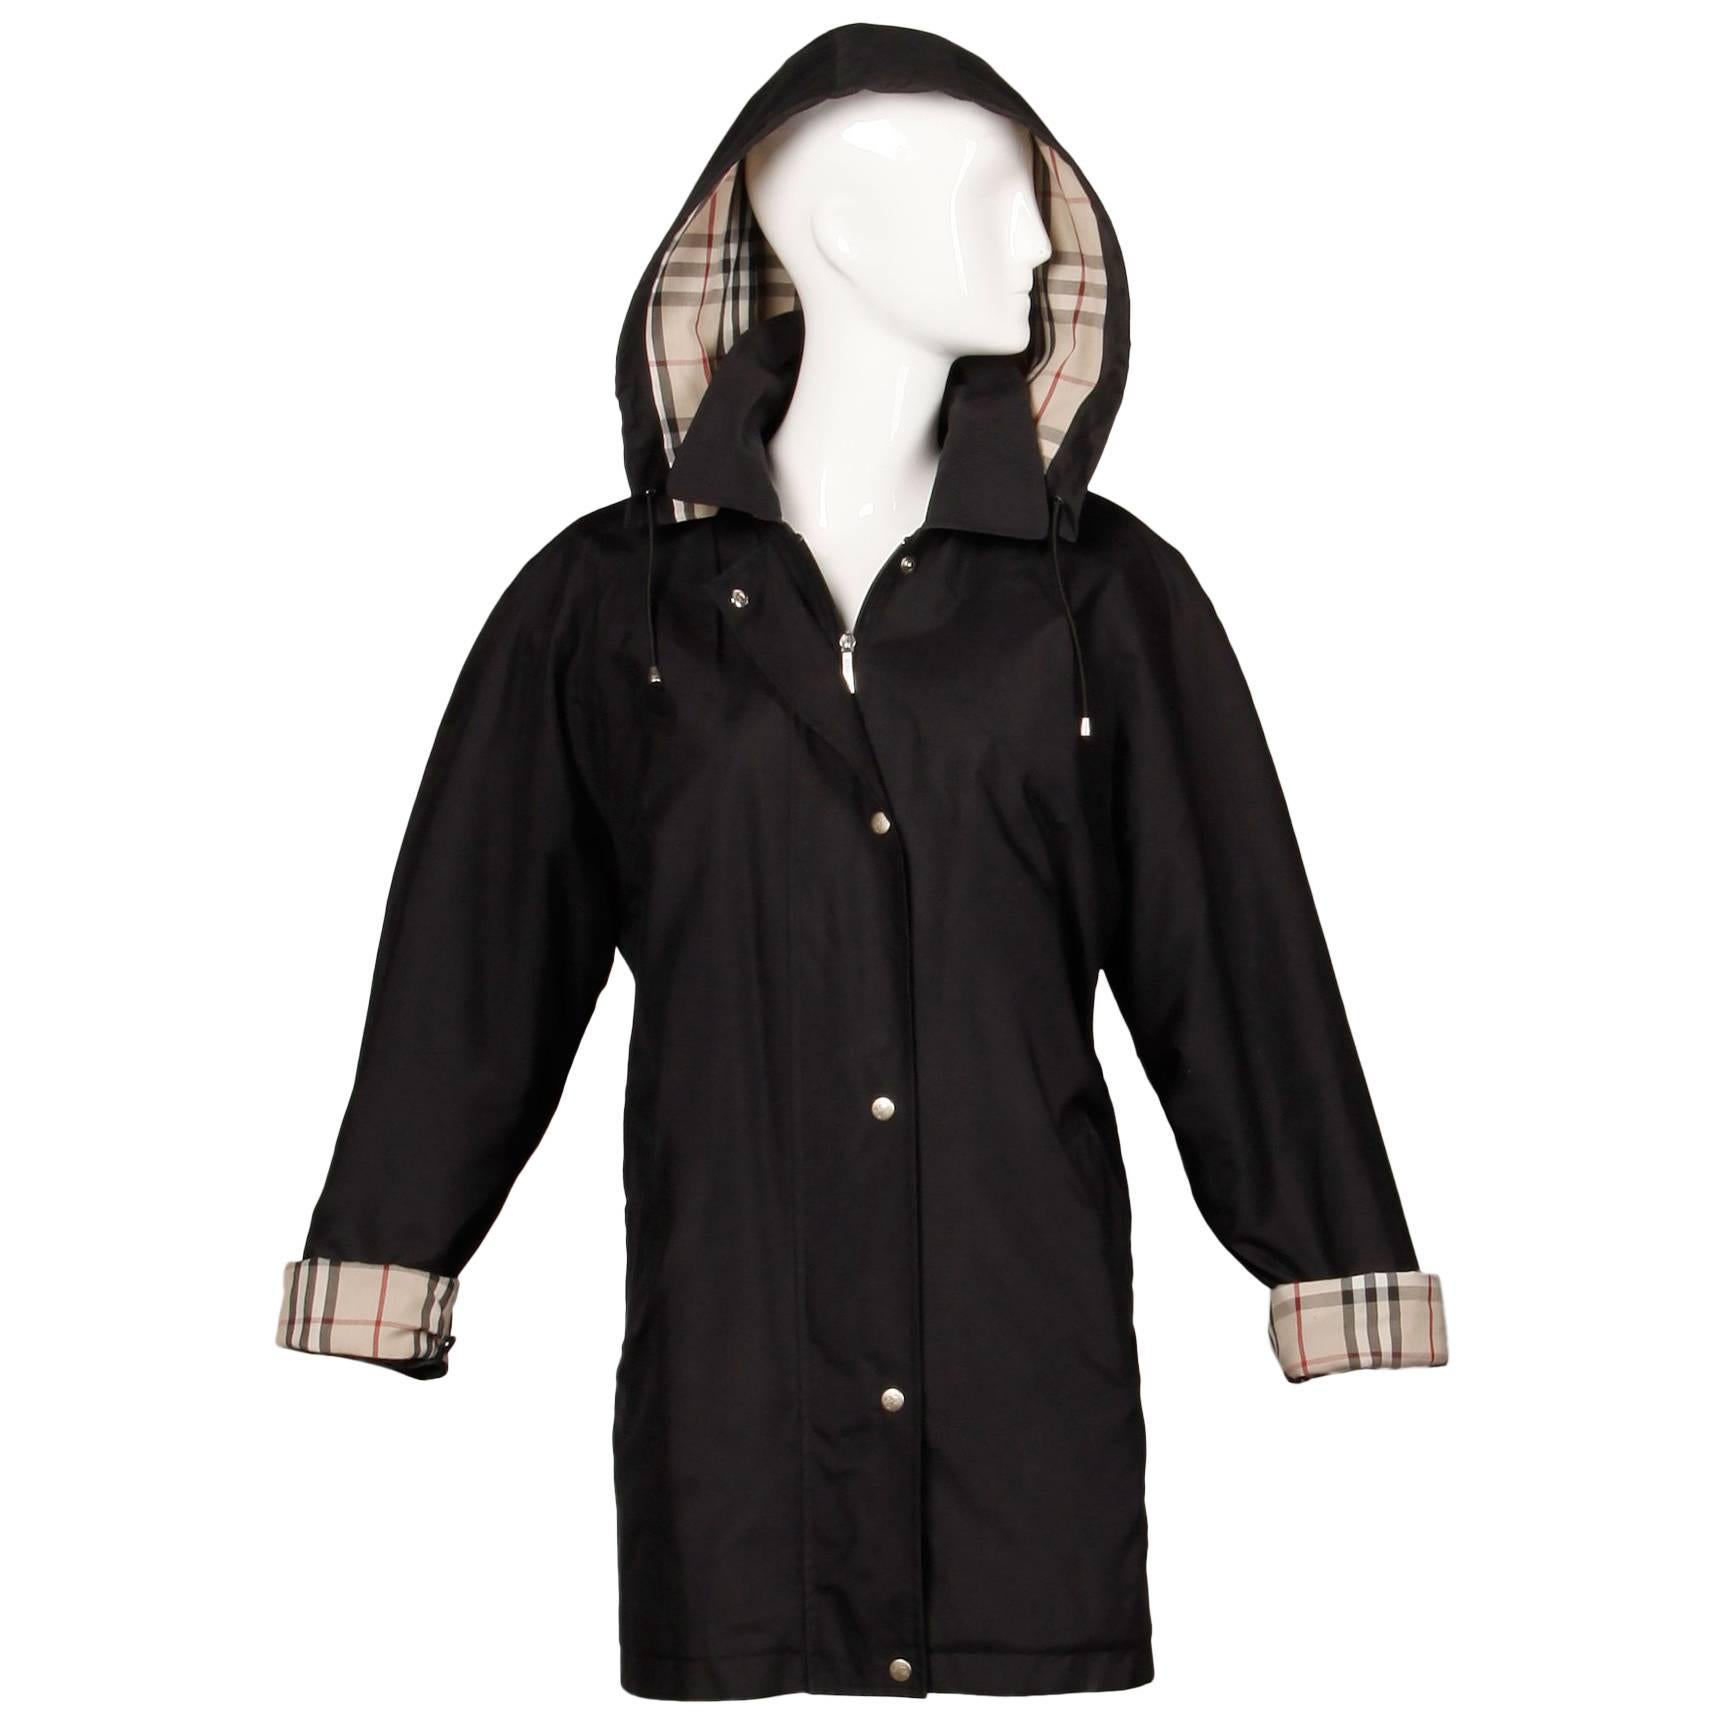 Burberry Black Rain Coat or Jacket with Nova Plaid Lining + Detachable Hood